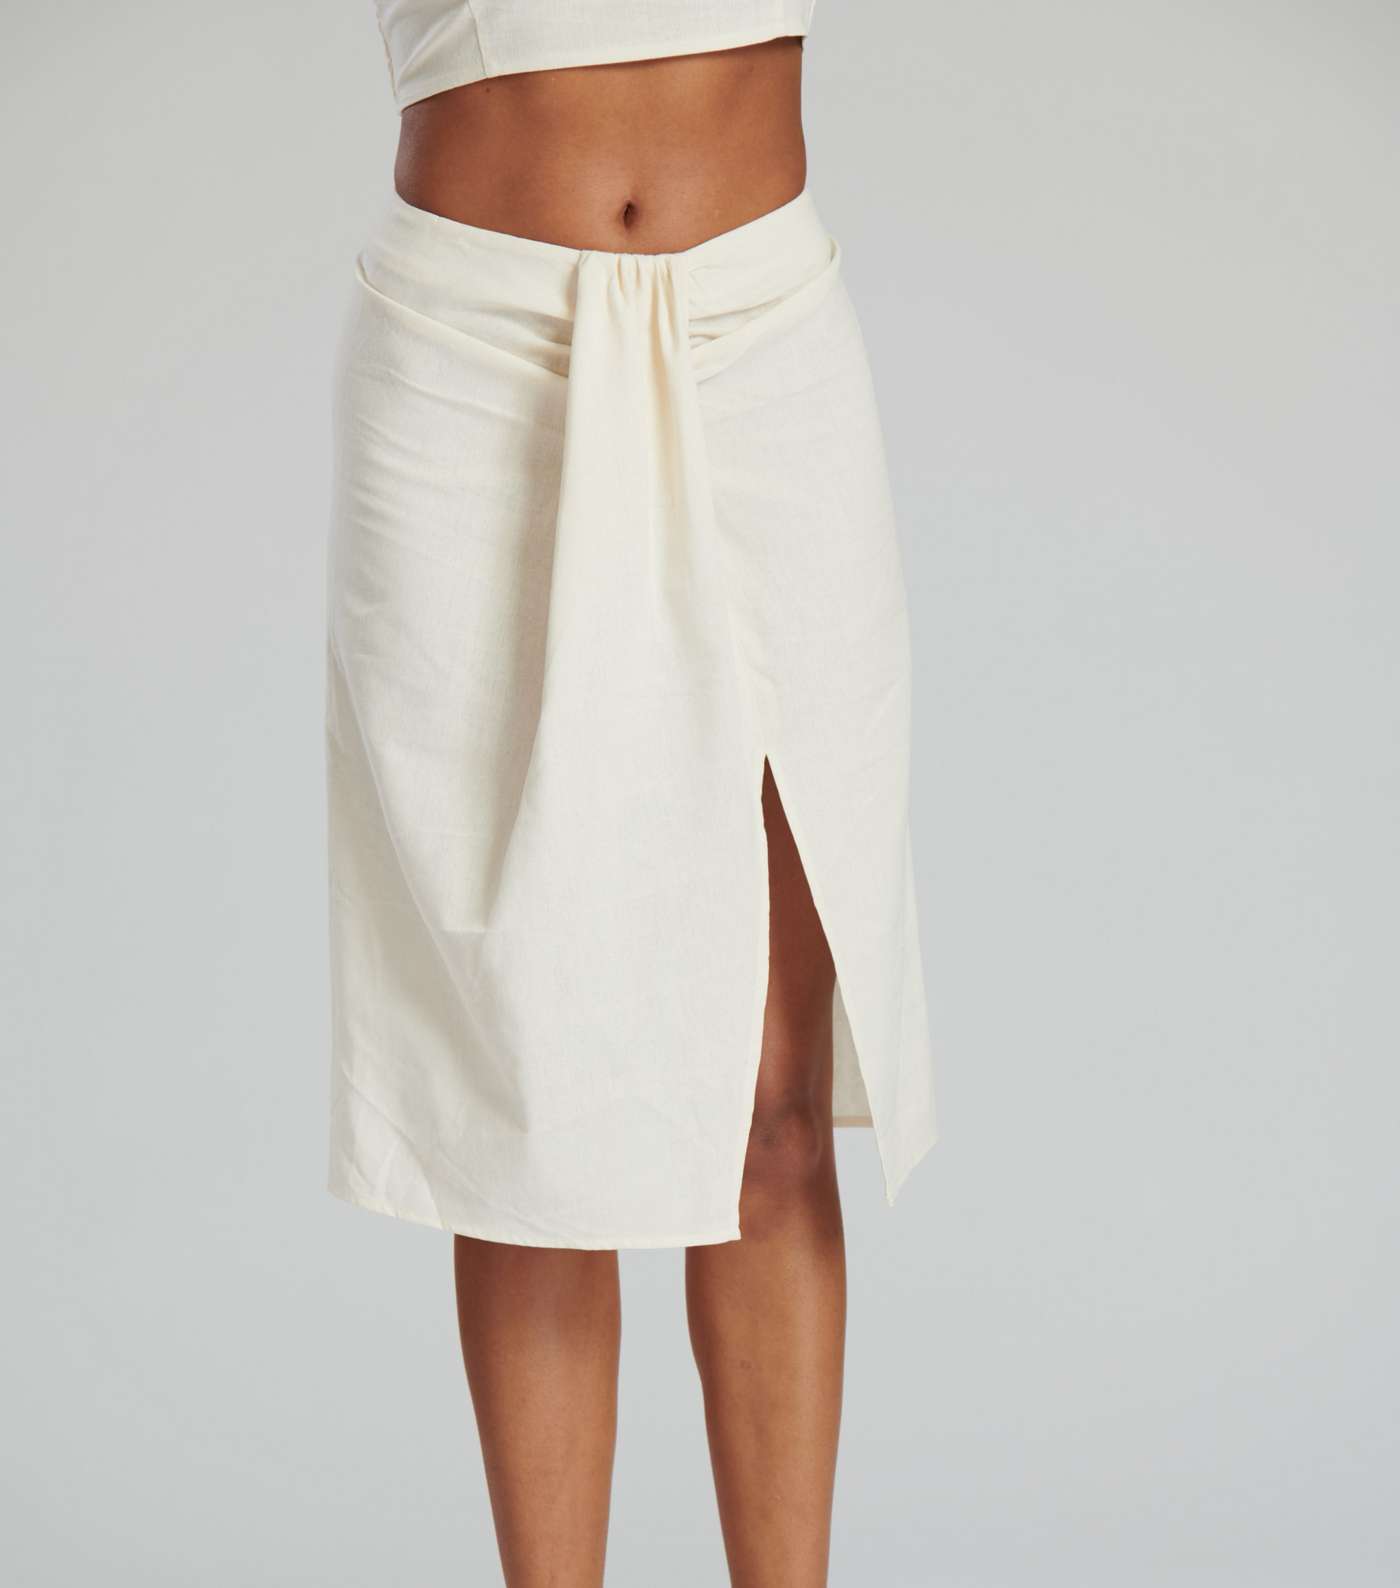 South Beach Cream Linen-Look Knot Midi Skirt Image 2